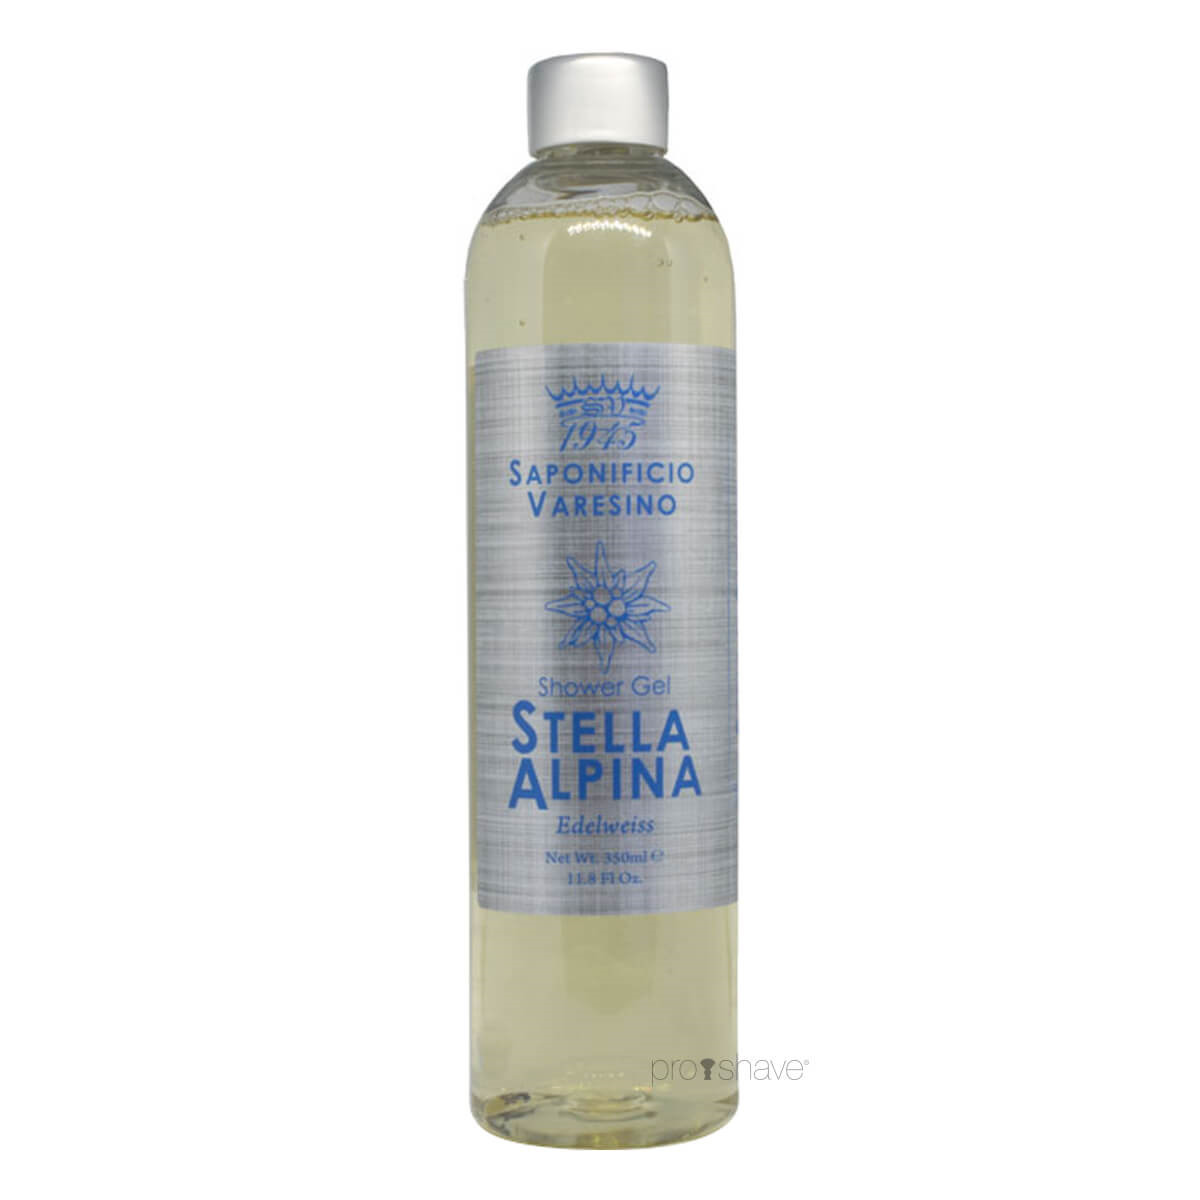 Se Saponificio Varesino Shower Gel, Stella Alpina, 350 ml. hos Proshave